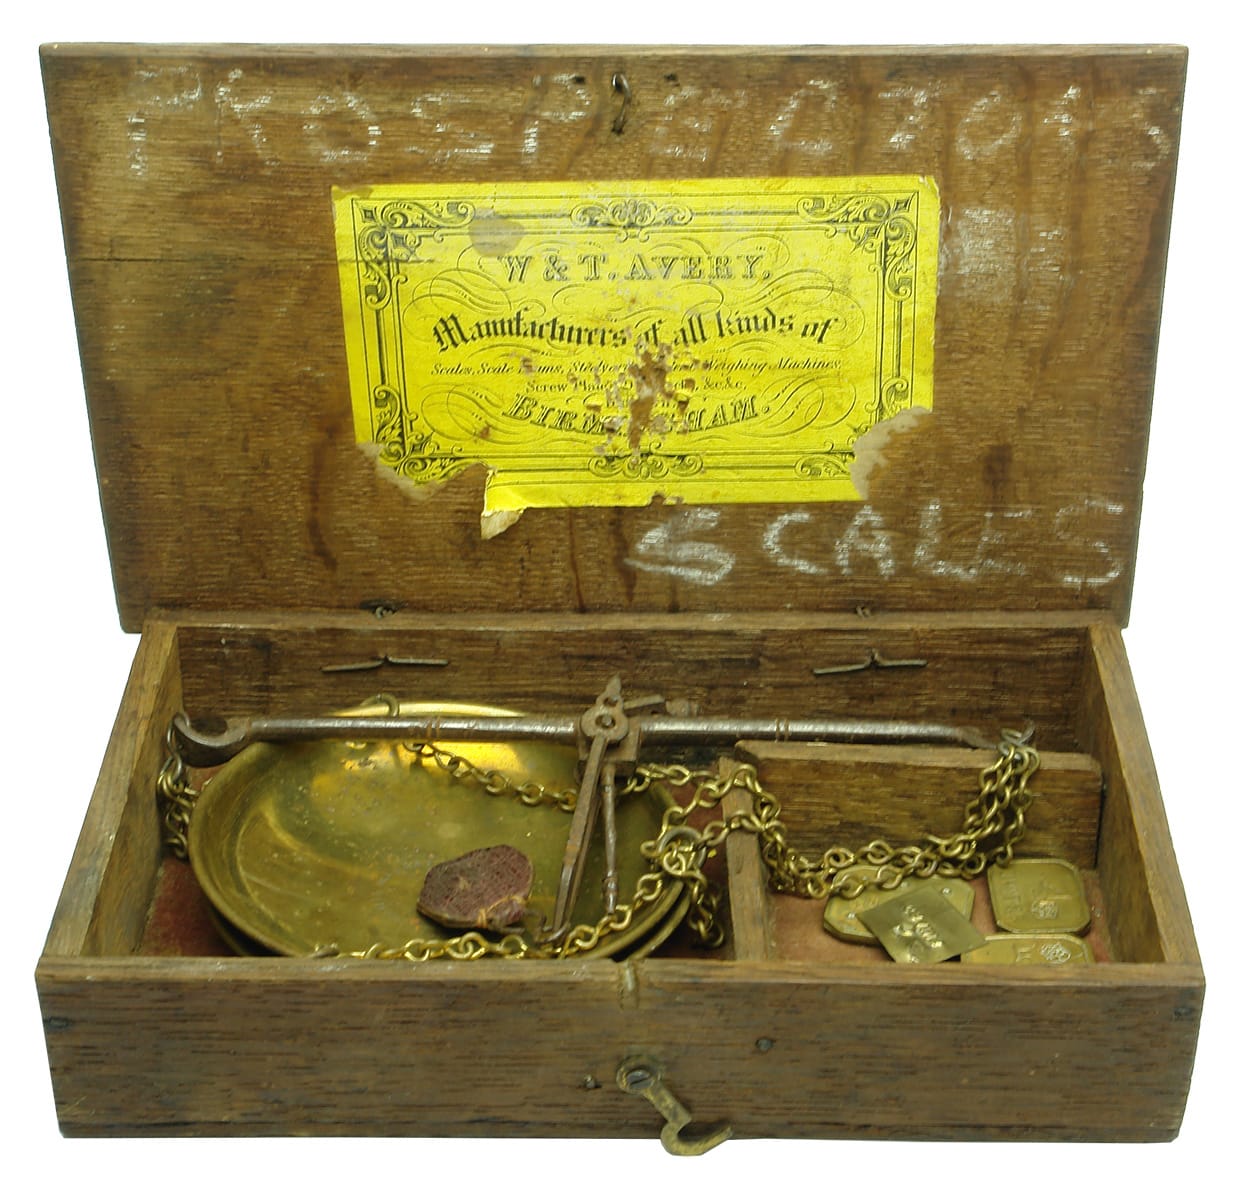 Avery Birmingham Gold Scales in box